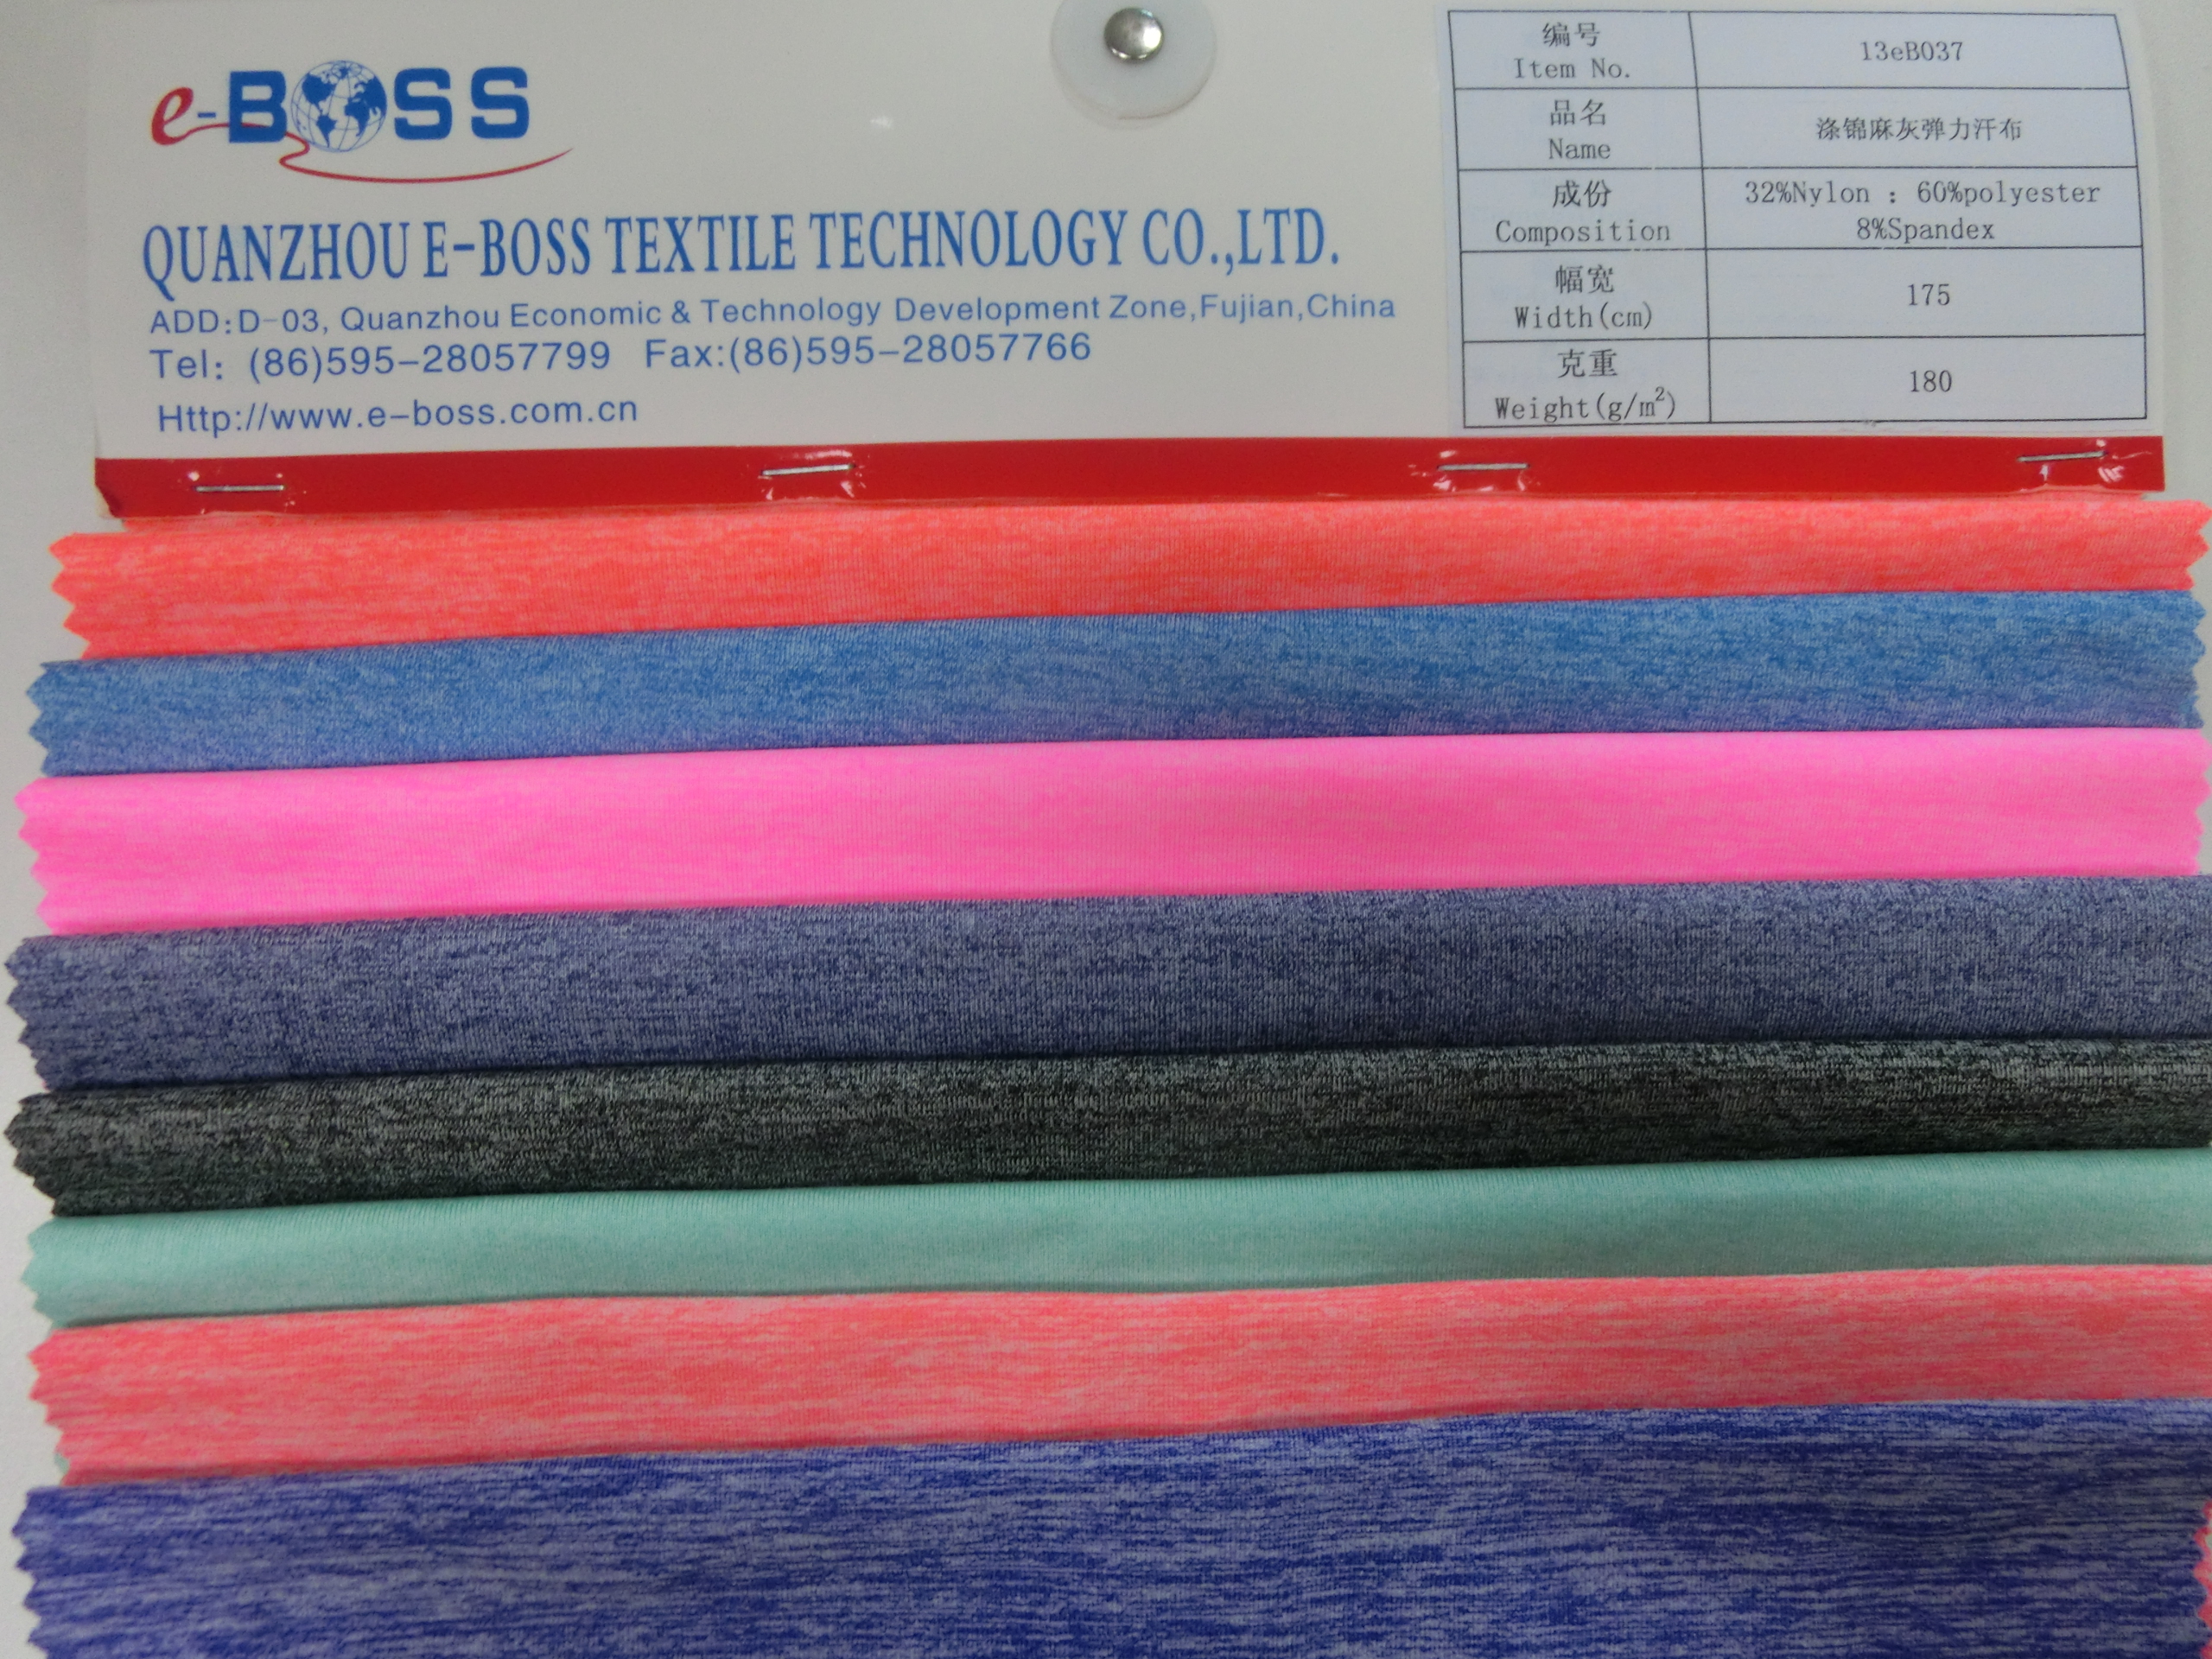 13eB037 32%Nylon 60%Polyester 8%Spandex 175cmX180gm2